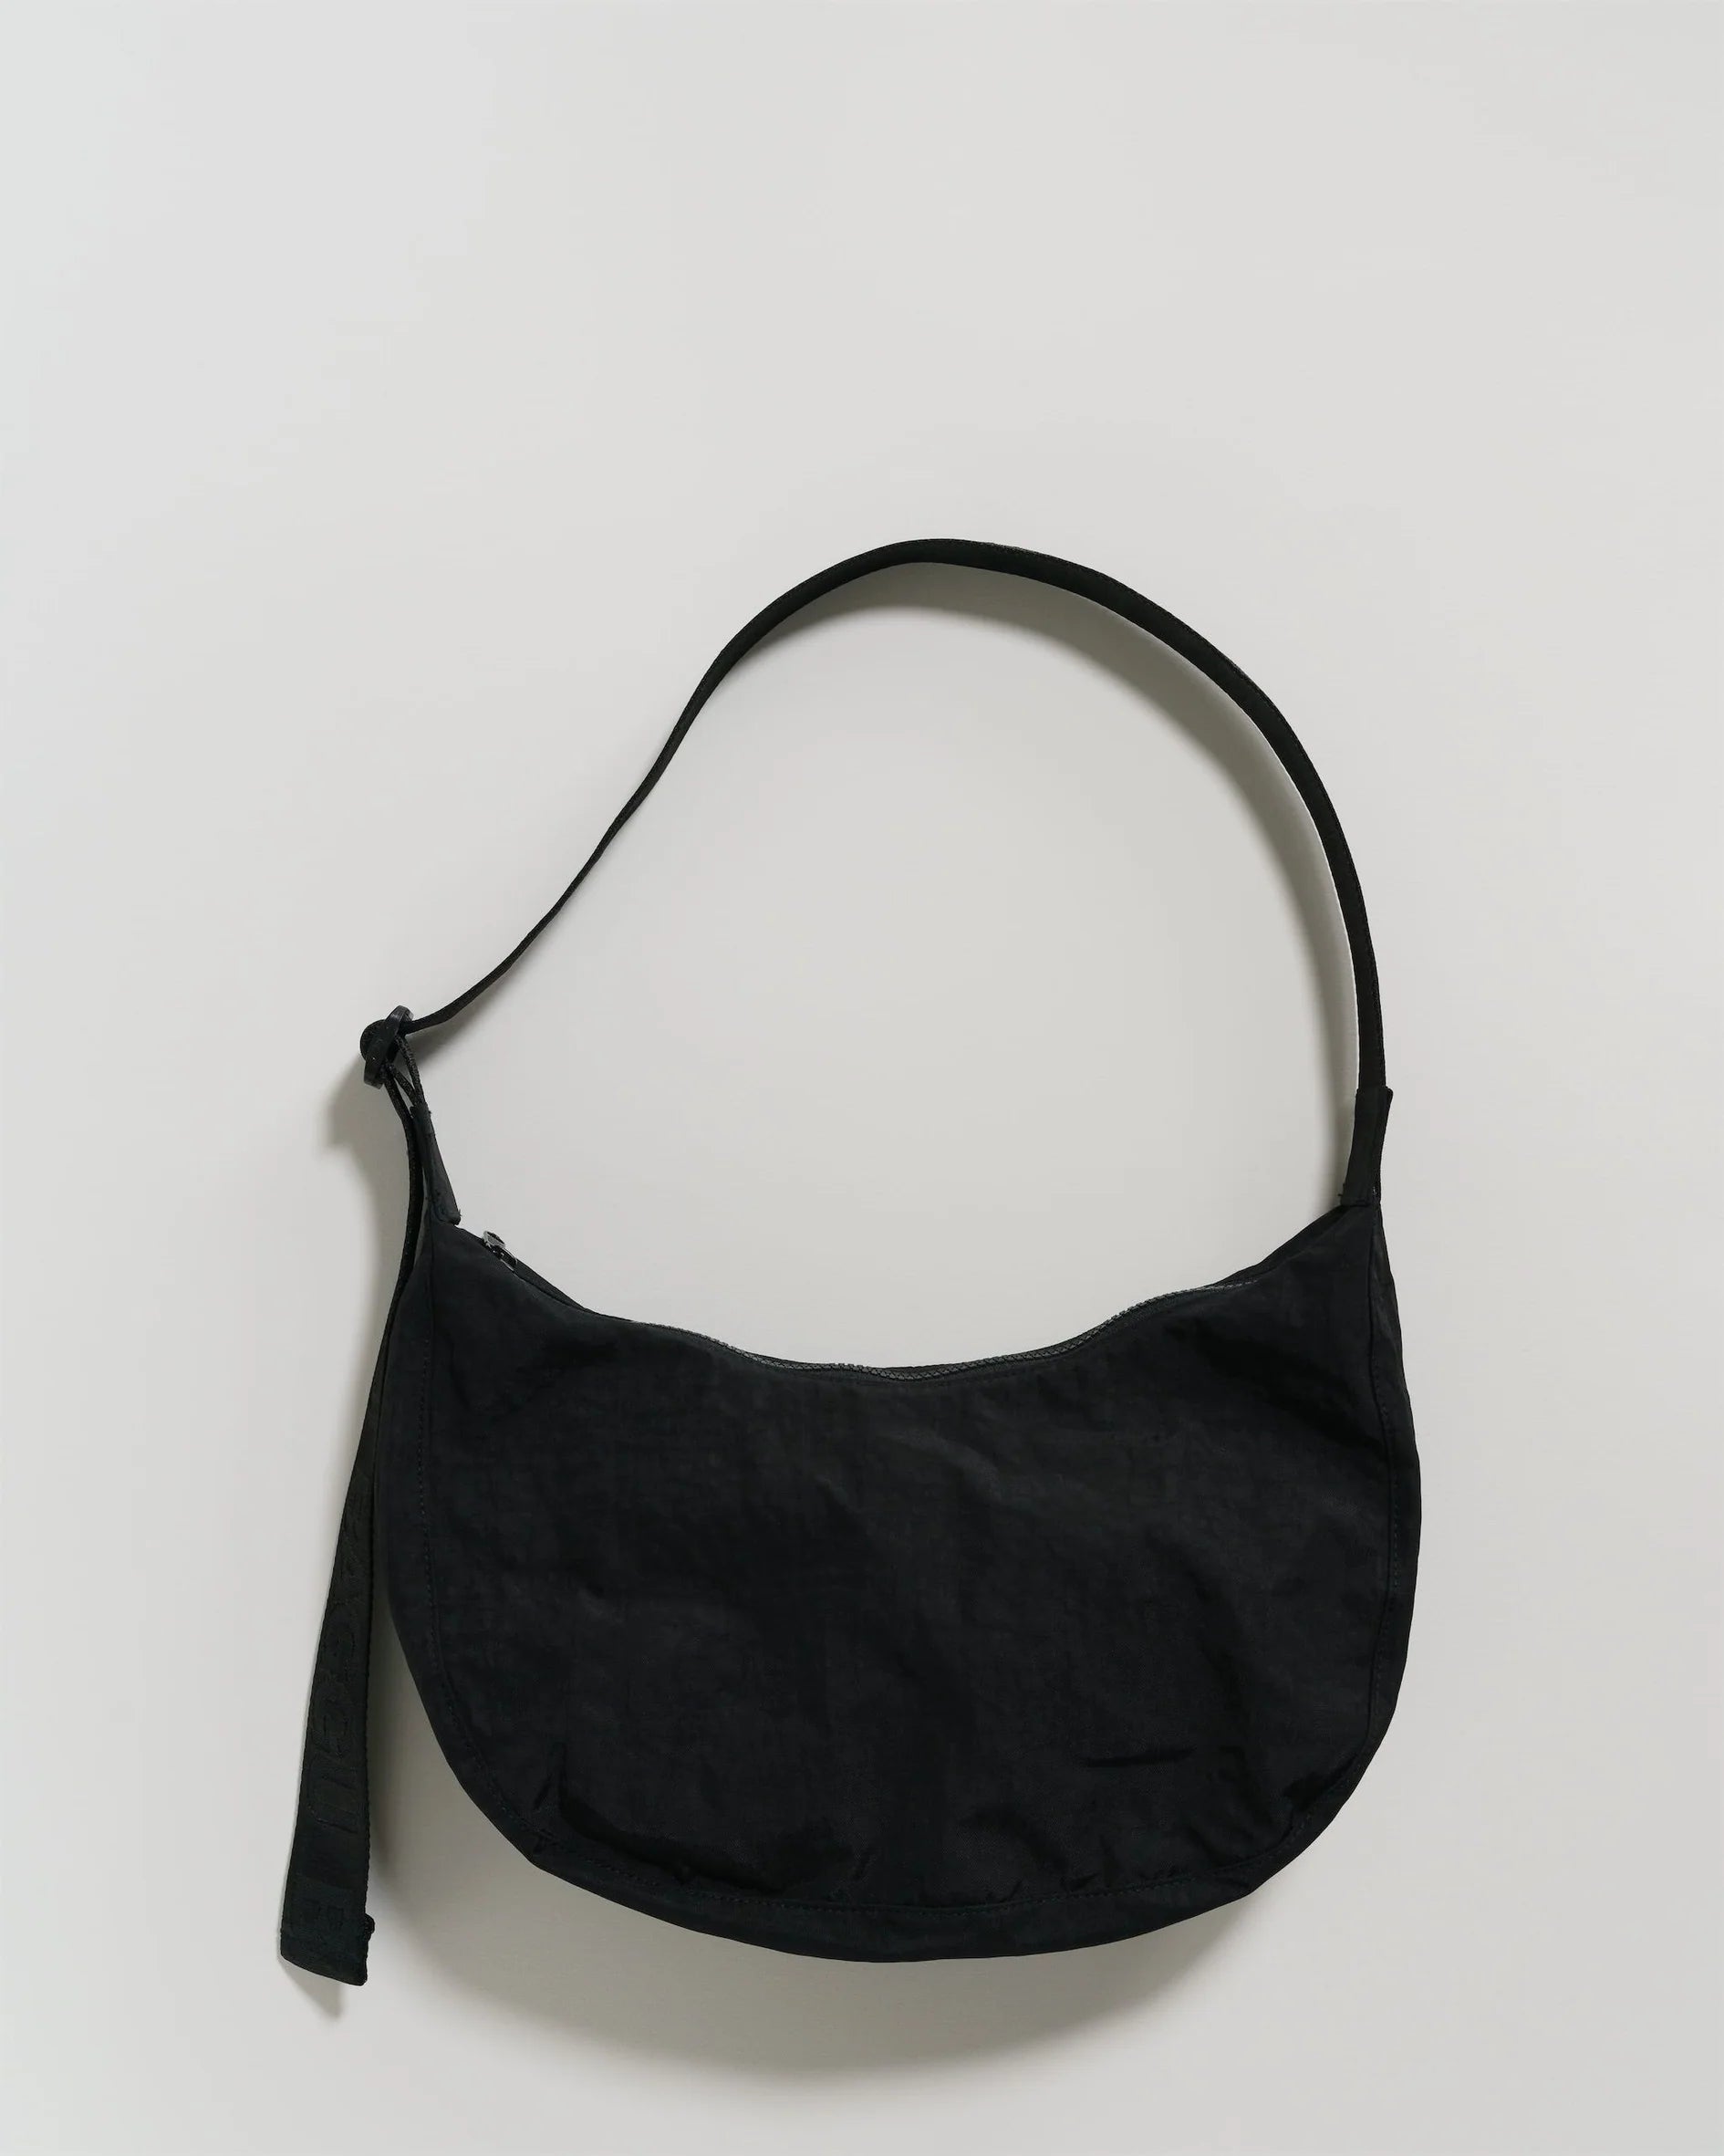 black crescent bag from baggu in size medium